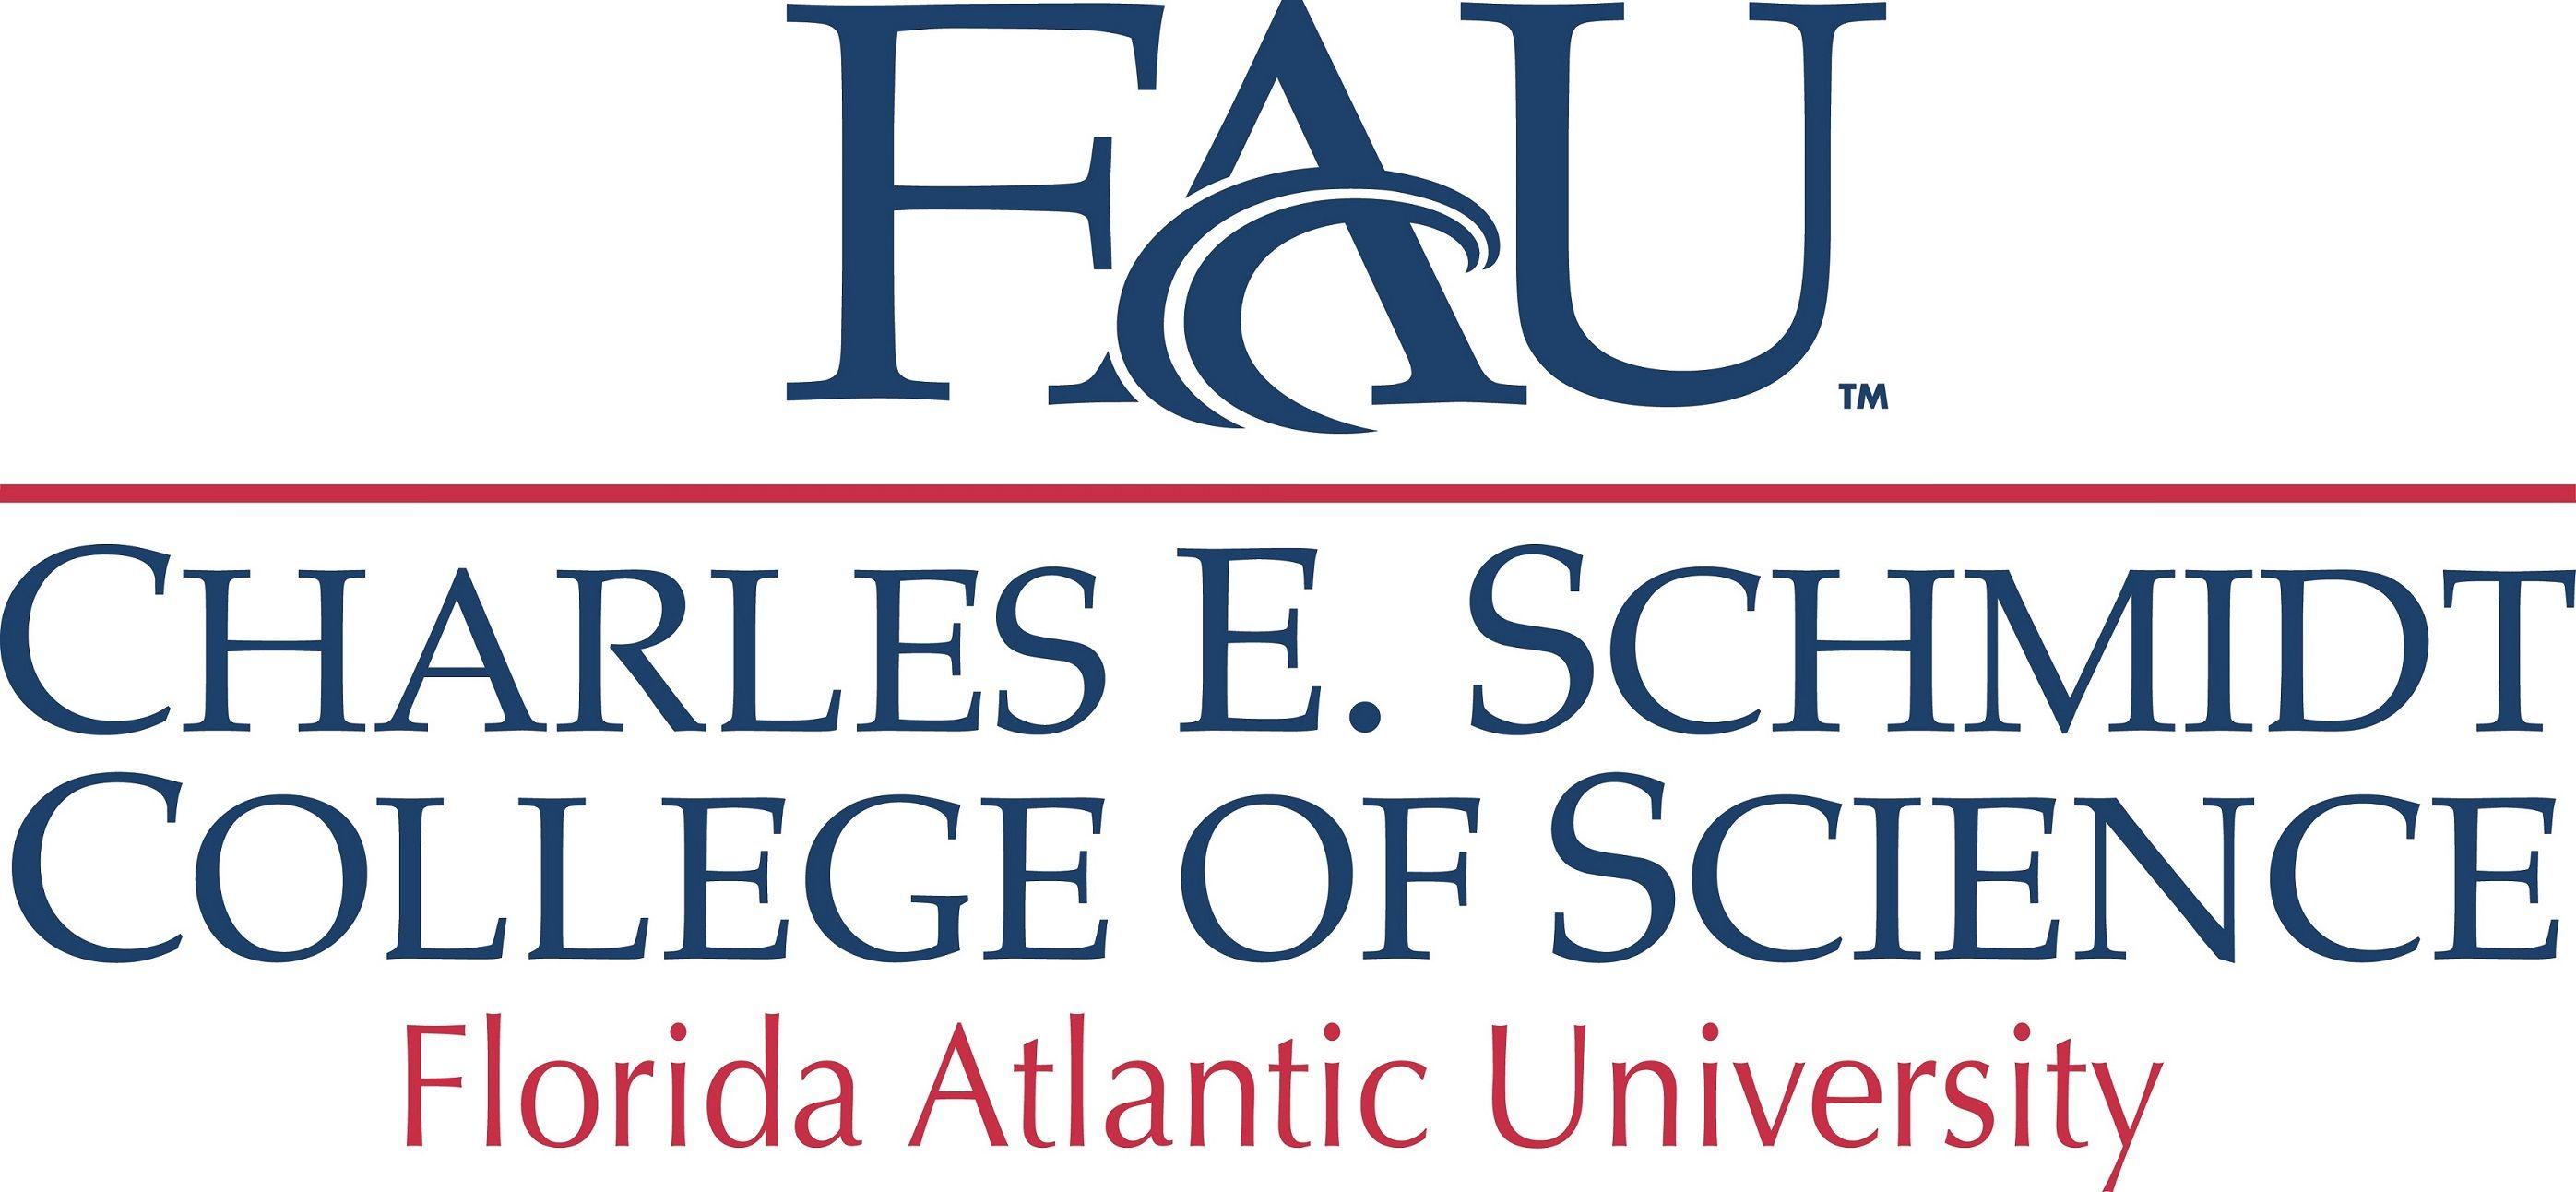 Florida Atlantic University Logo - MSMSO : Florida Atlantic University - Harbor Branch Oceanographic ...